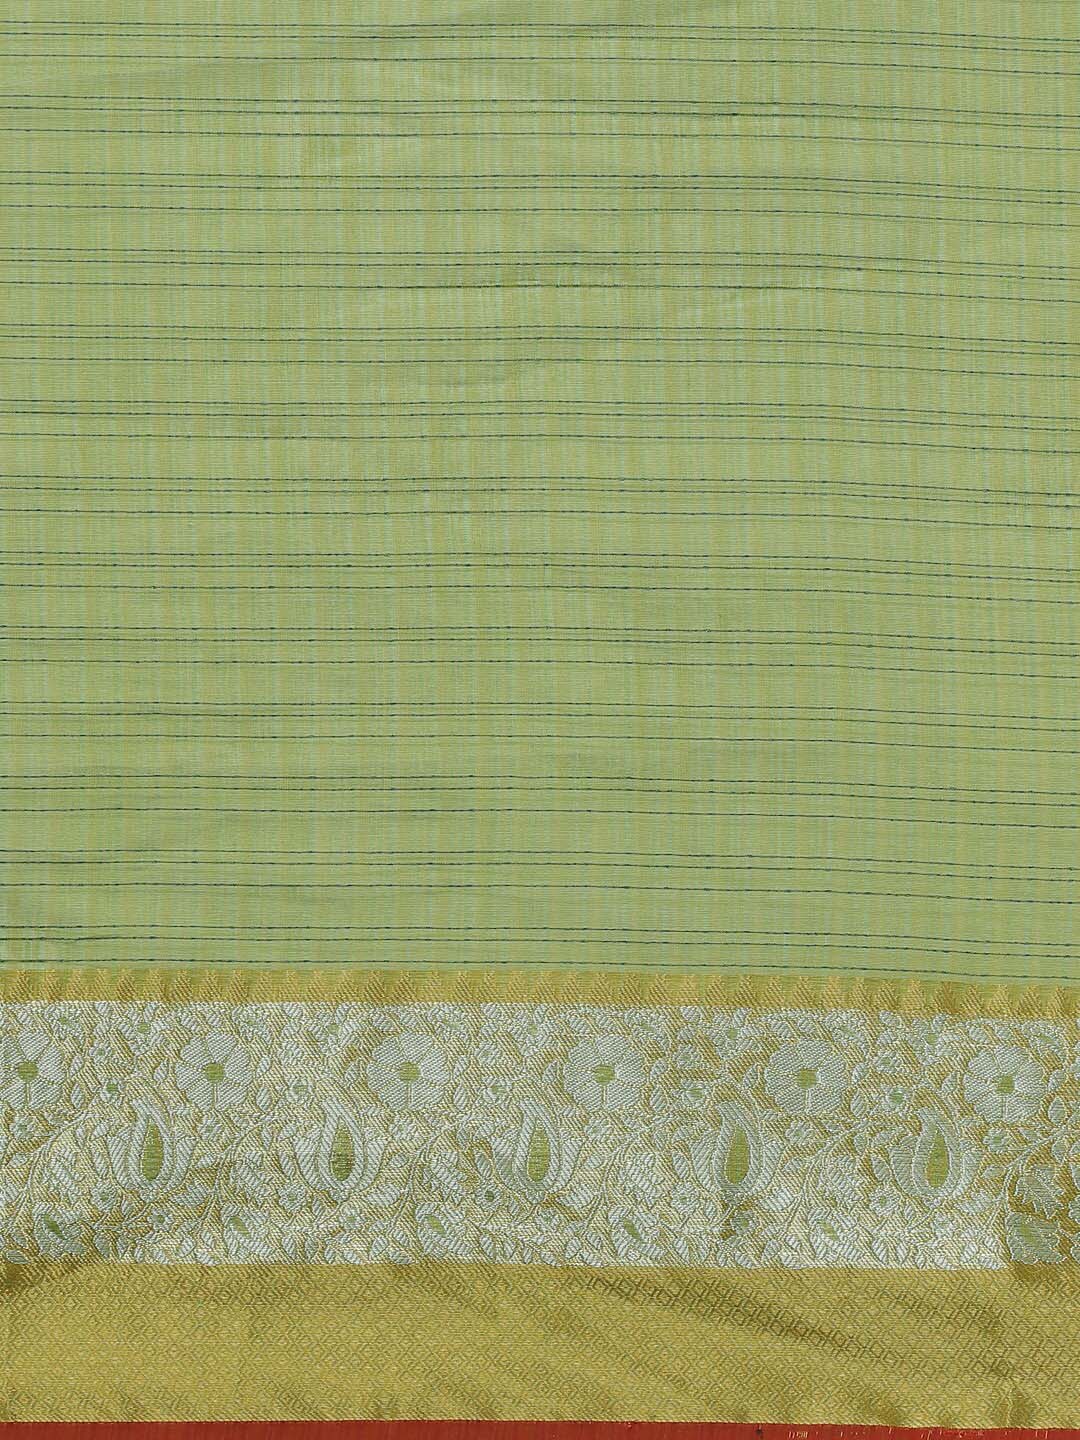 Indethnic Banarasi Green Woven Design Work Wear Saree - View 1